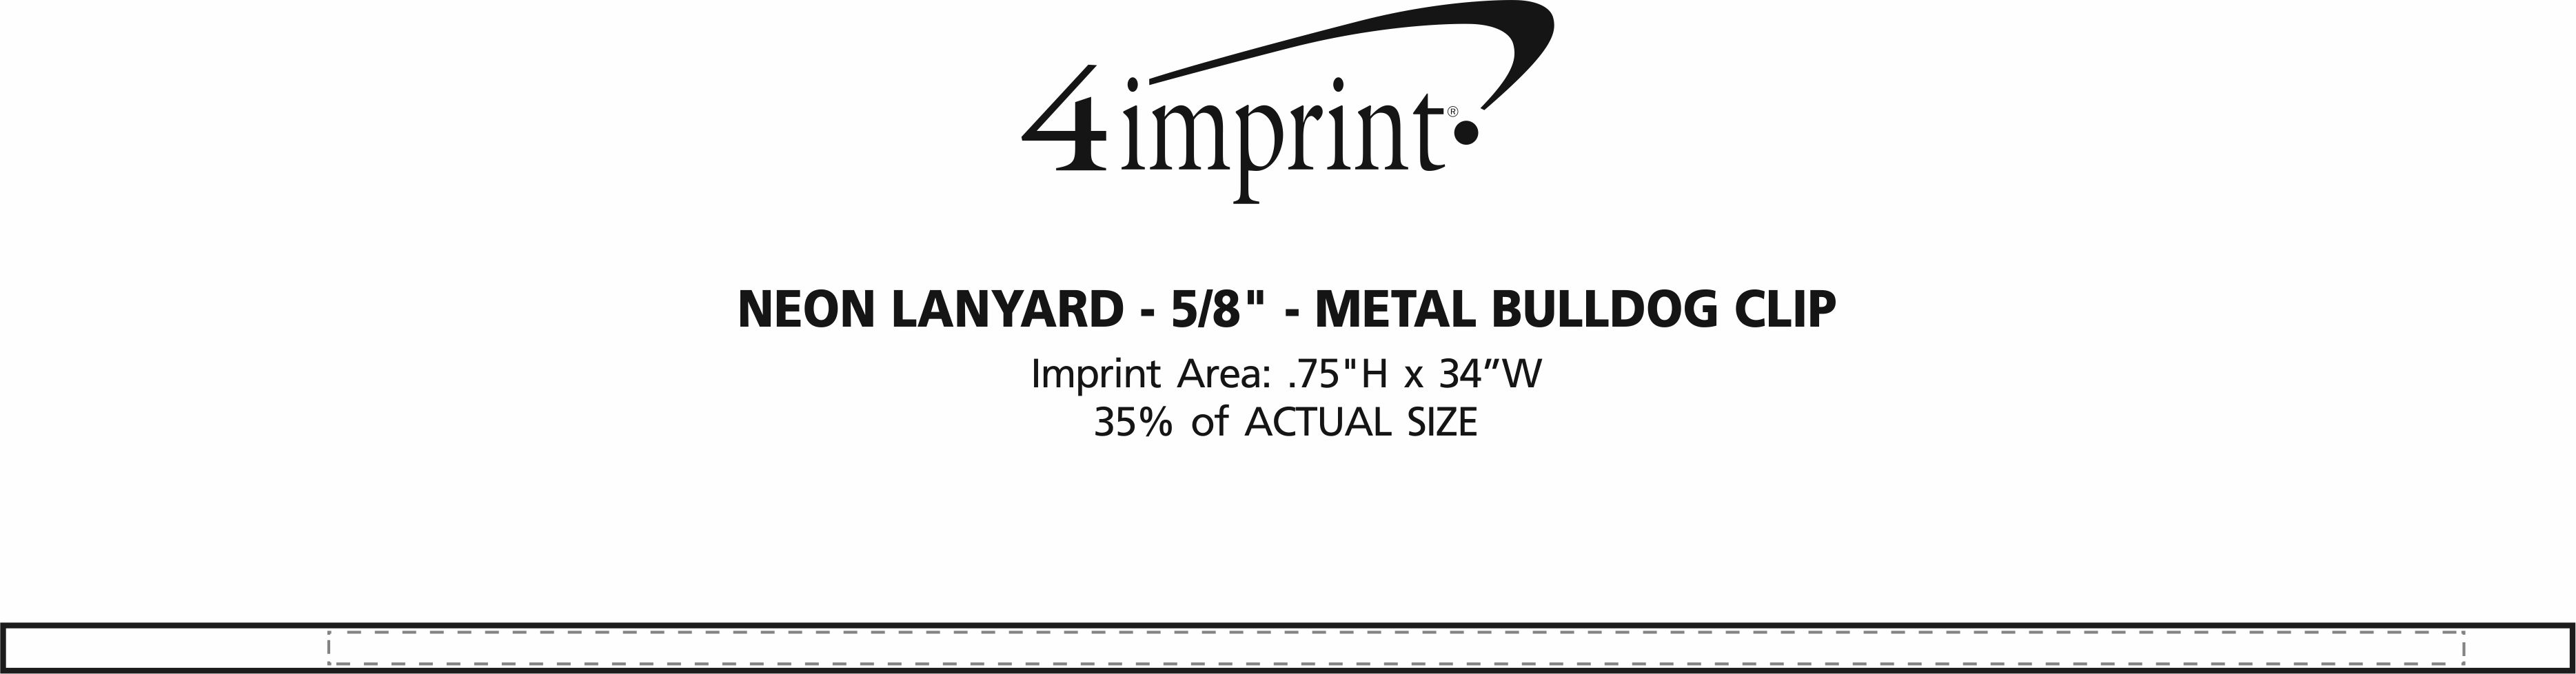 Imprint Area of Neon Lanyard - 5/8" - Metal Bulldog Clip